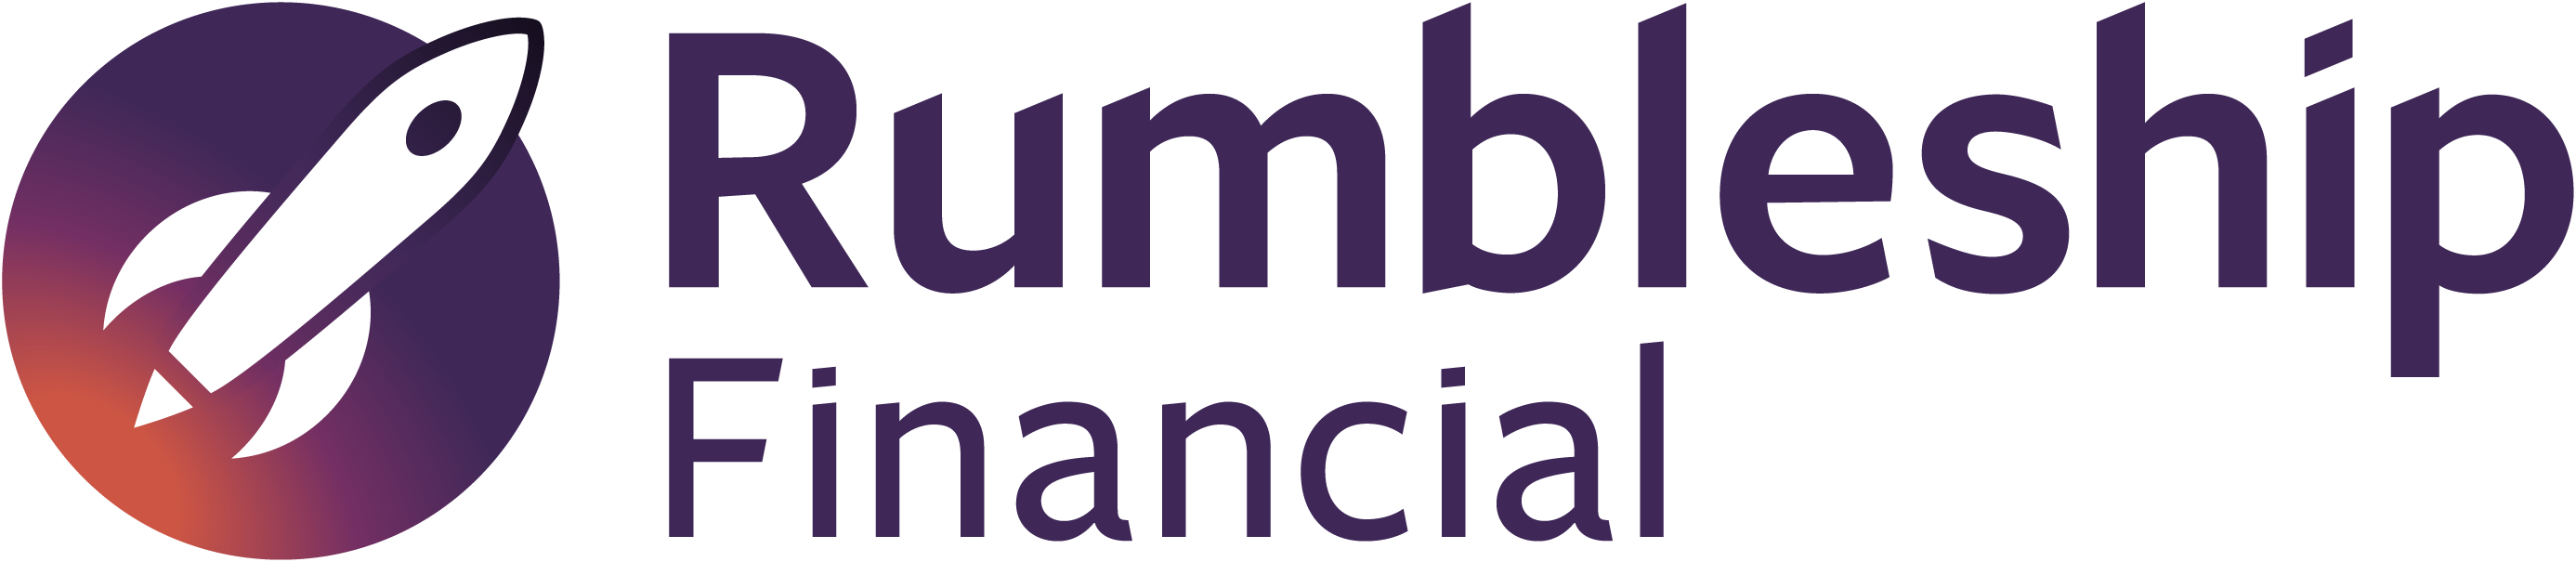 Rumbleship logo.